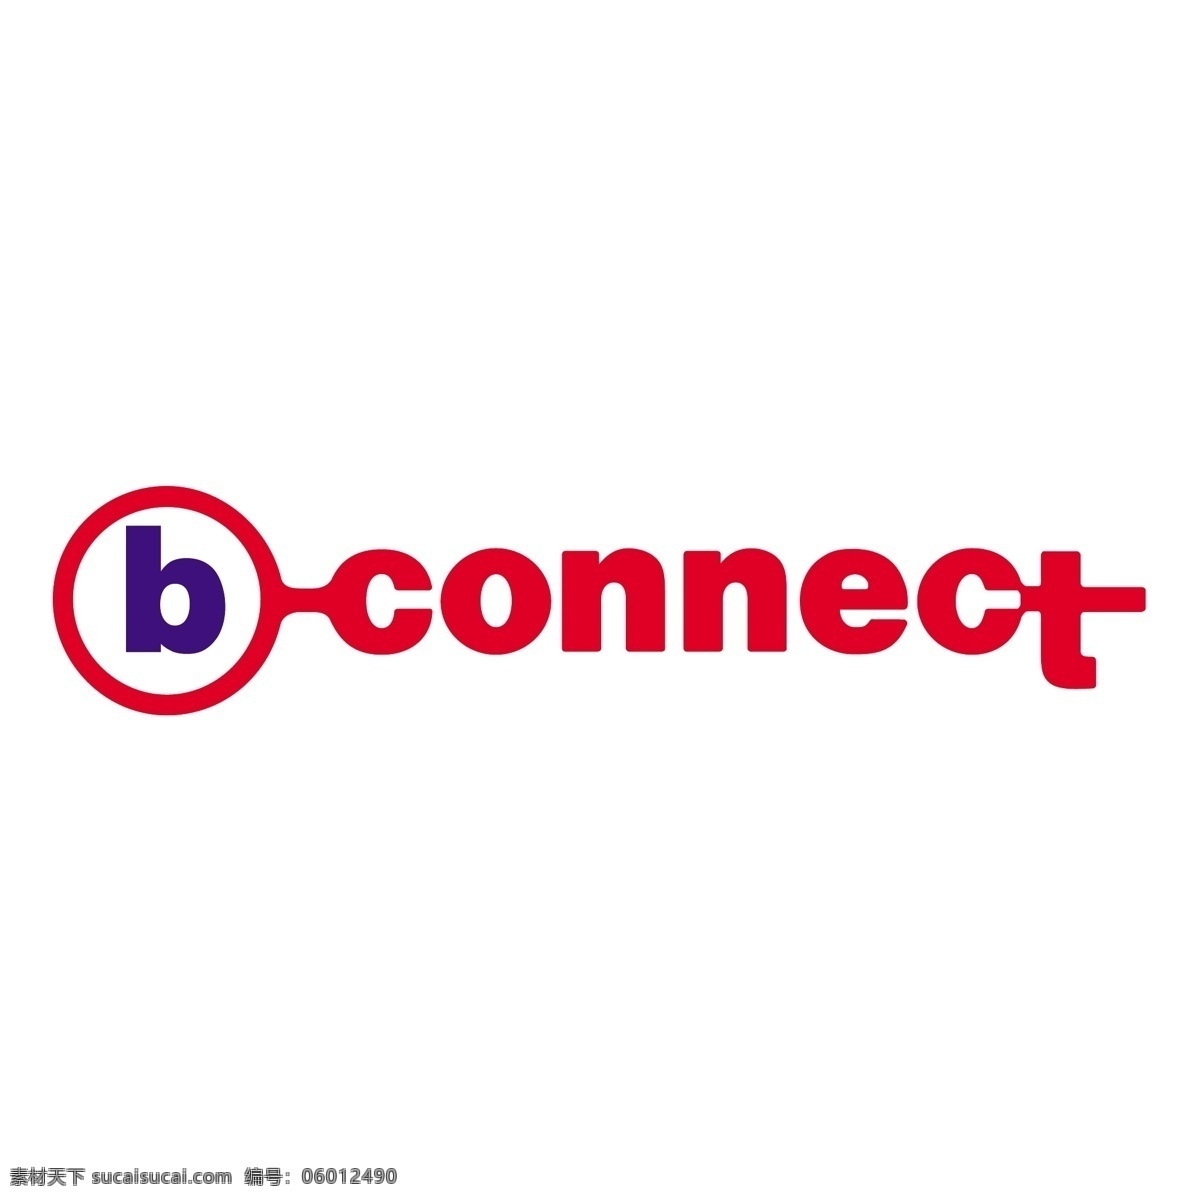 b连接 连接 globul 连接矢量图像 矢量 图形 载体 连接的载体 自由连接 连接的图形 连接设计 免费 艺术 连接向量 建筑家居